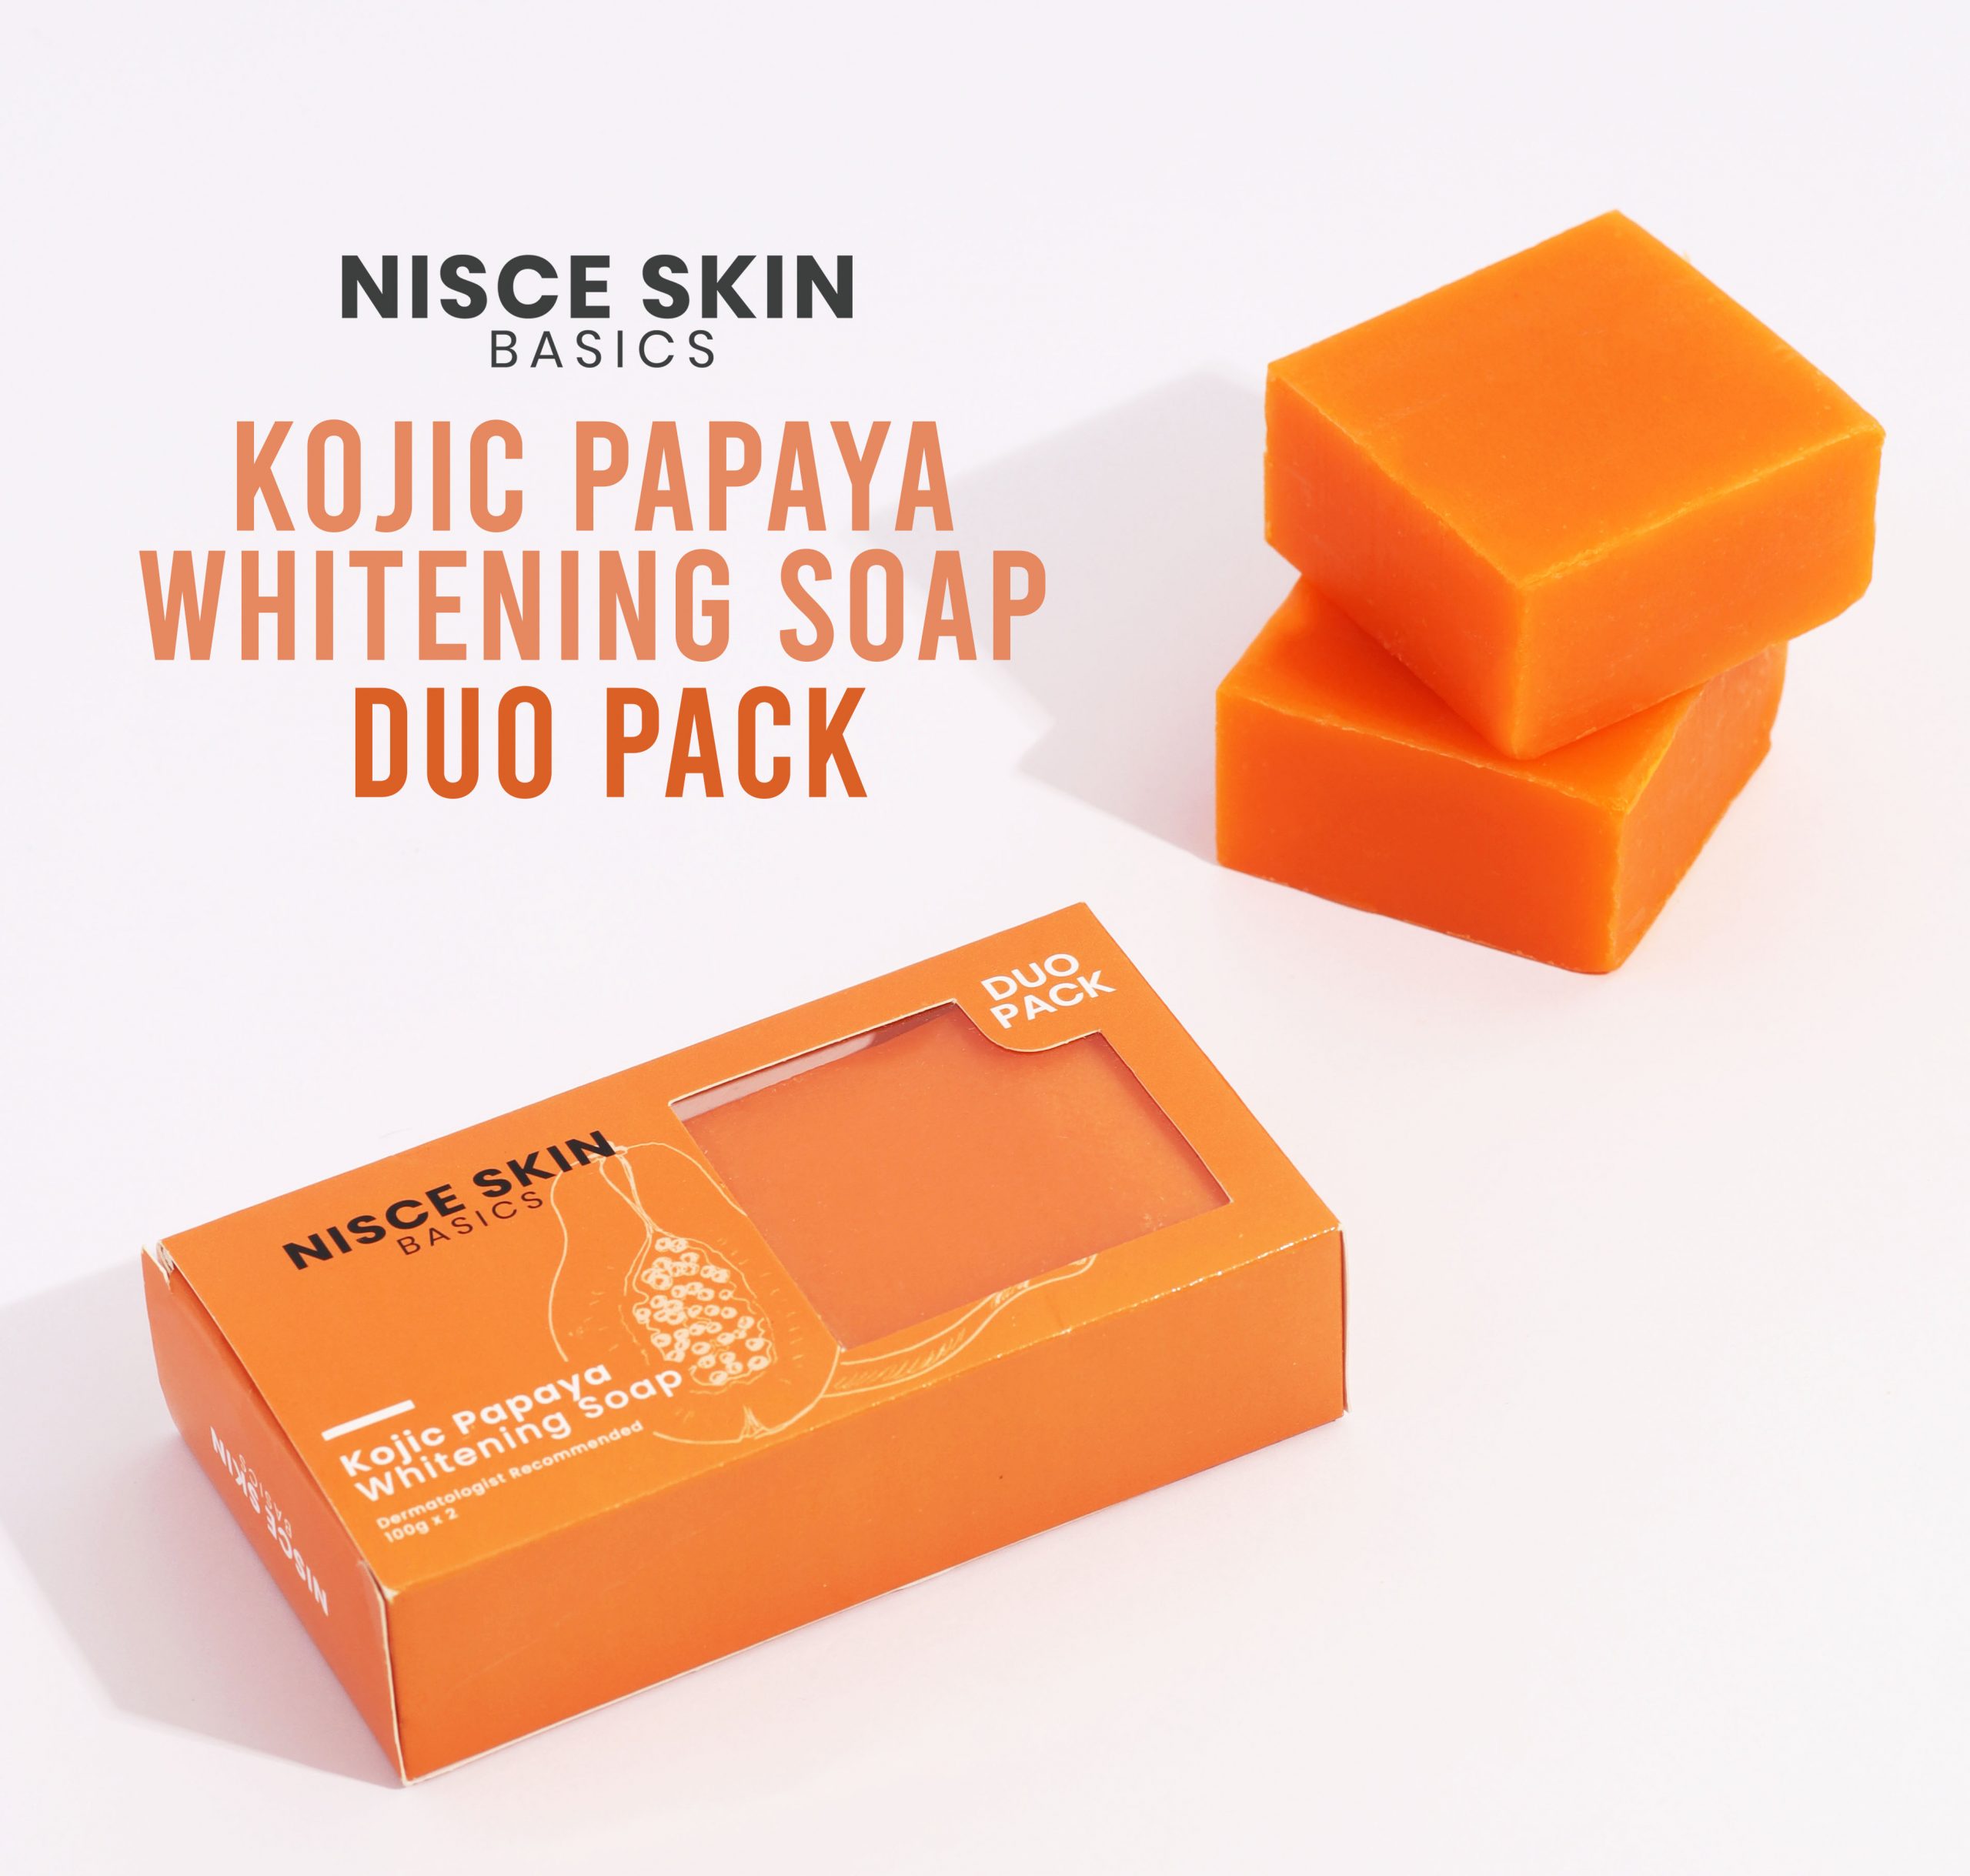 Nisce Skin Basics Kojic Papaya Whitening Soap Duo Pack Nisce